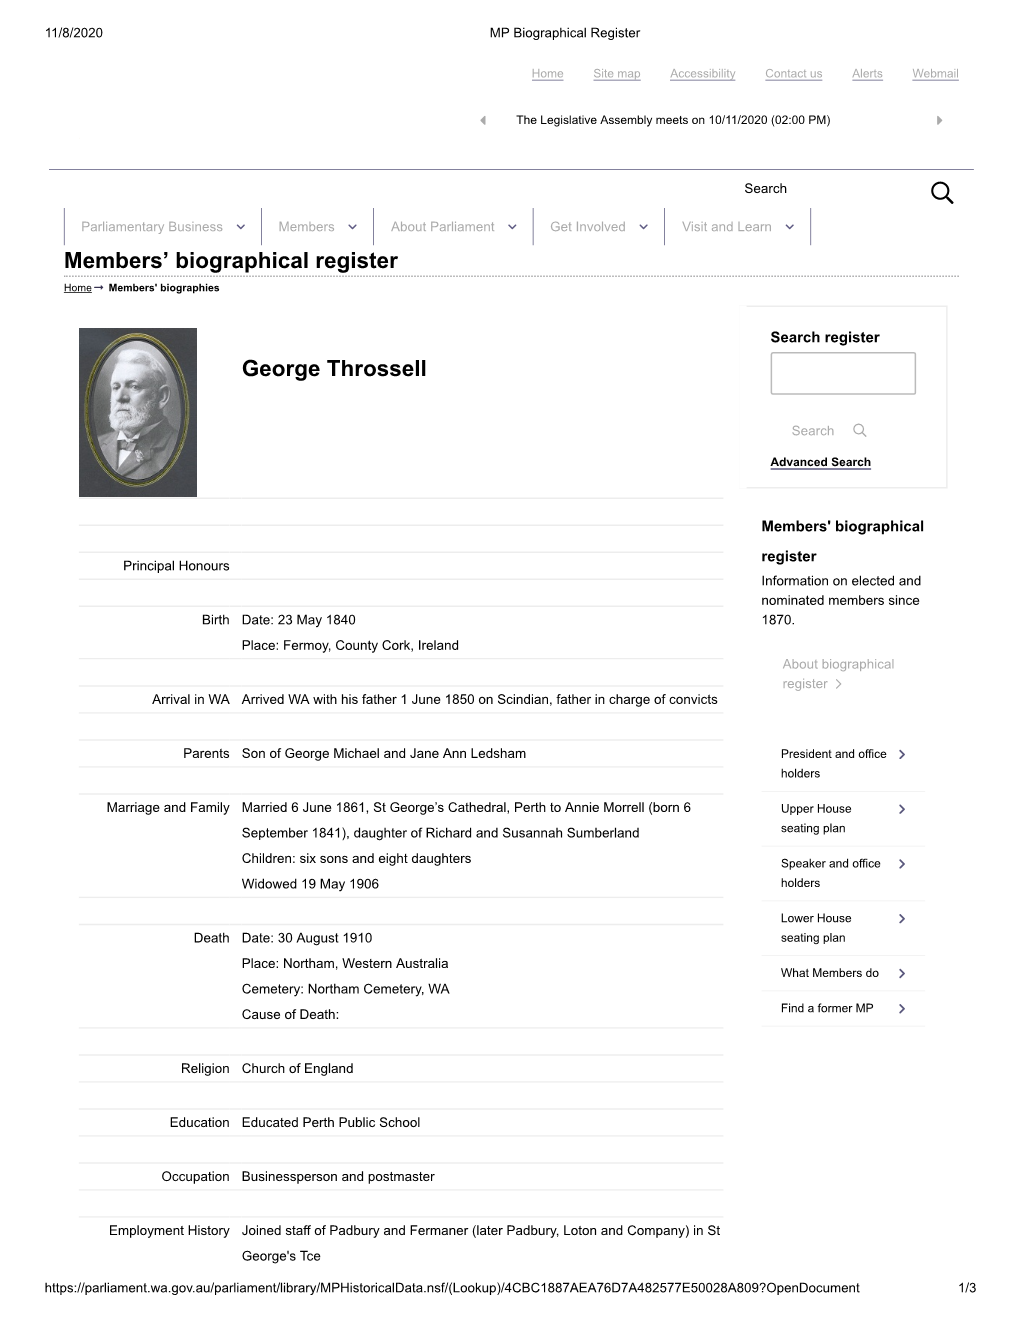 Members' Biographical Register George Throssell